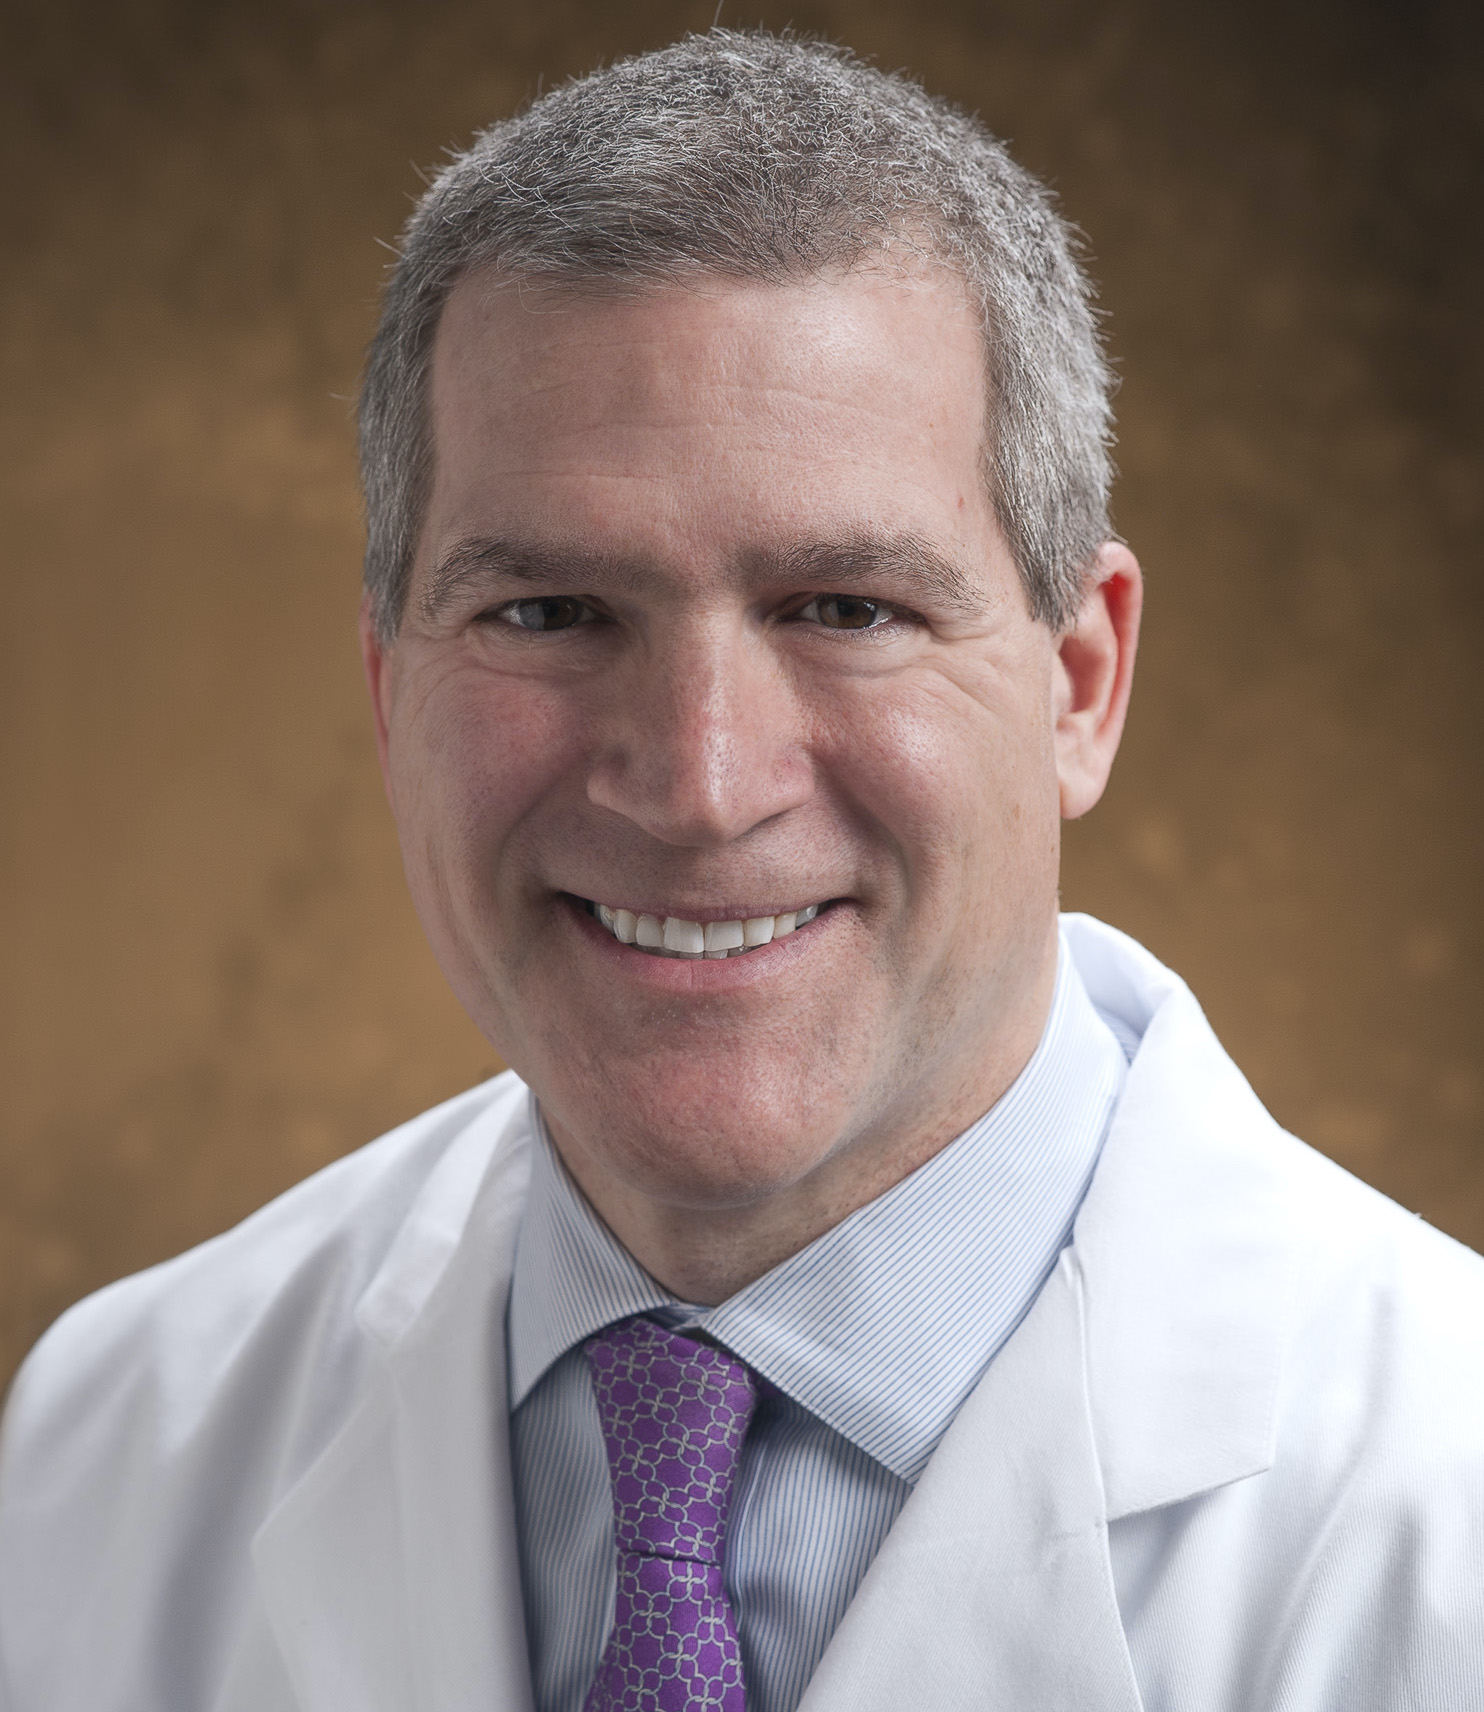 Dr. Mark McLaughlin - A Brain Surgeon's Quest to Out-Think Fear